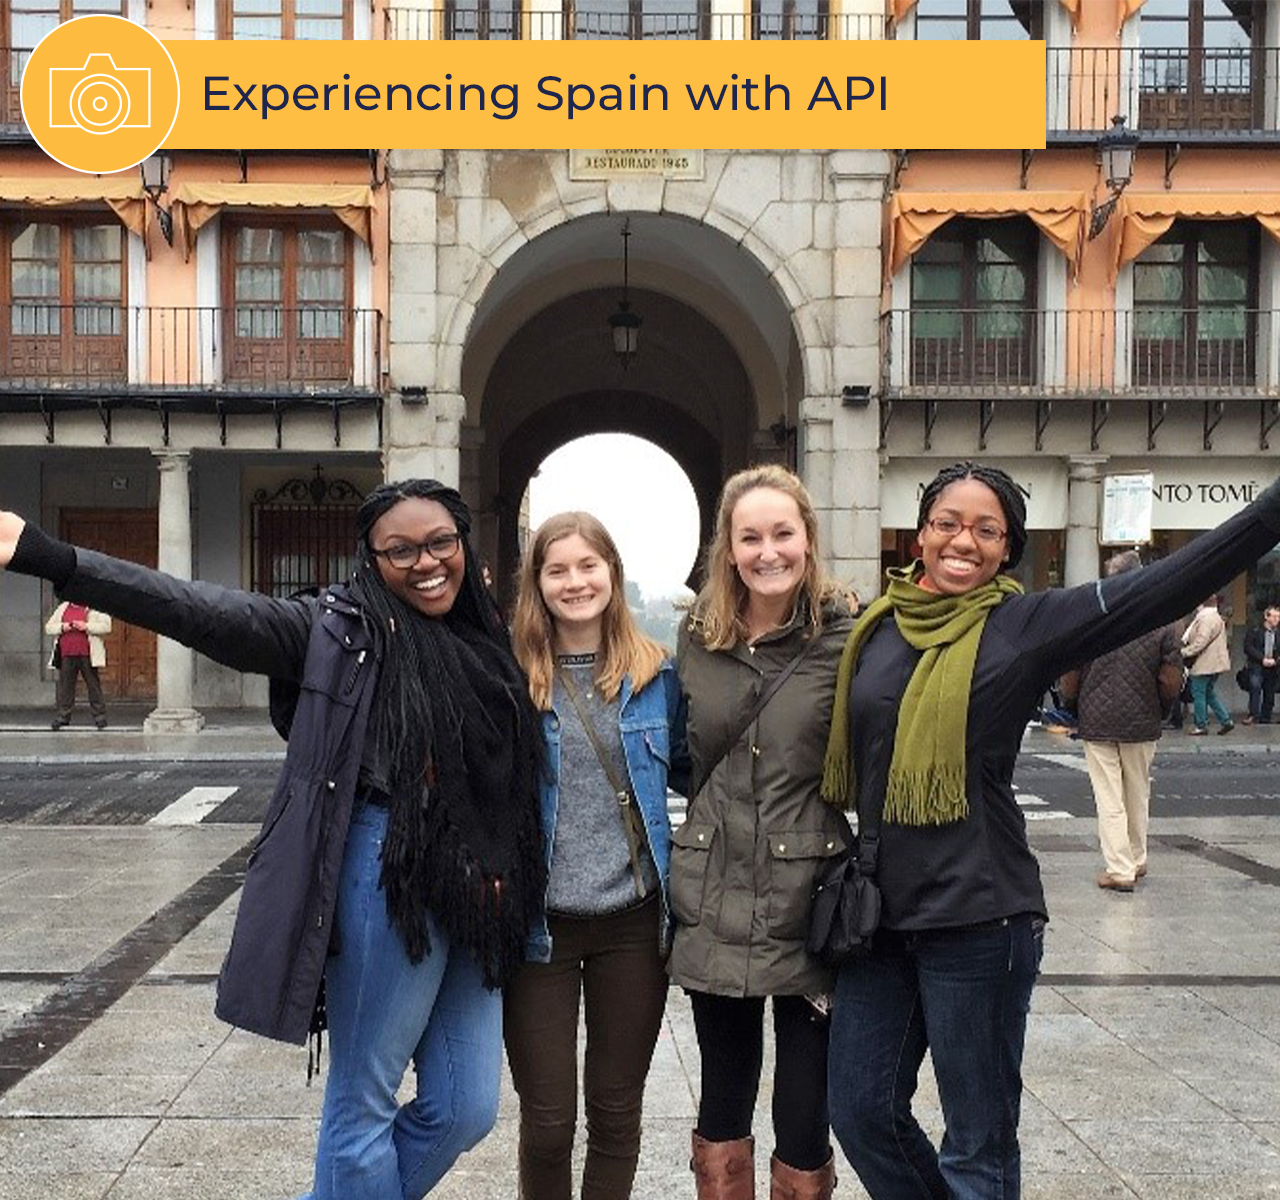 Students enjoying Spain with API